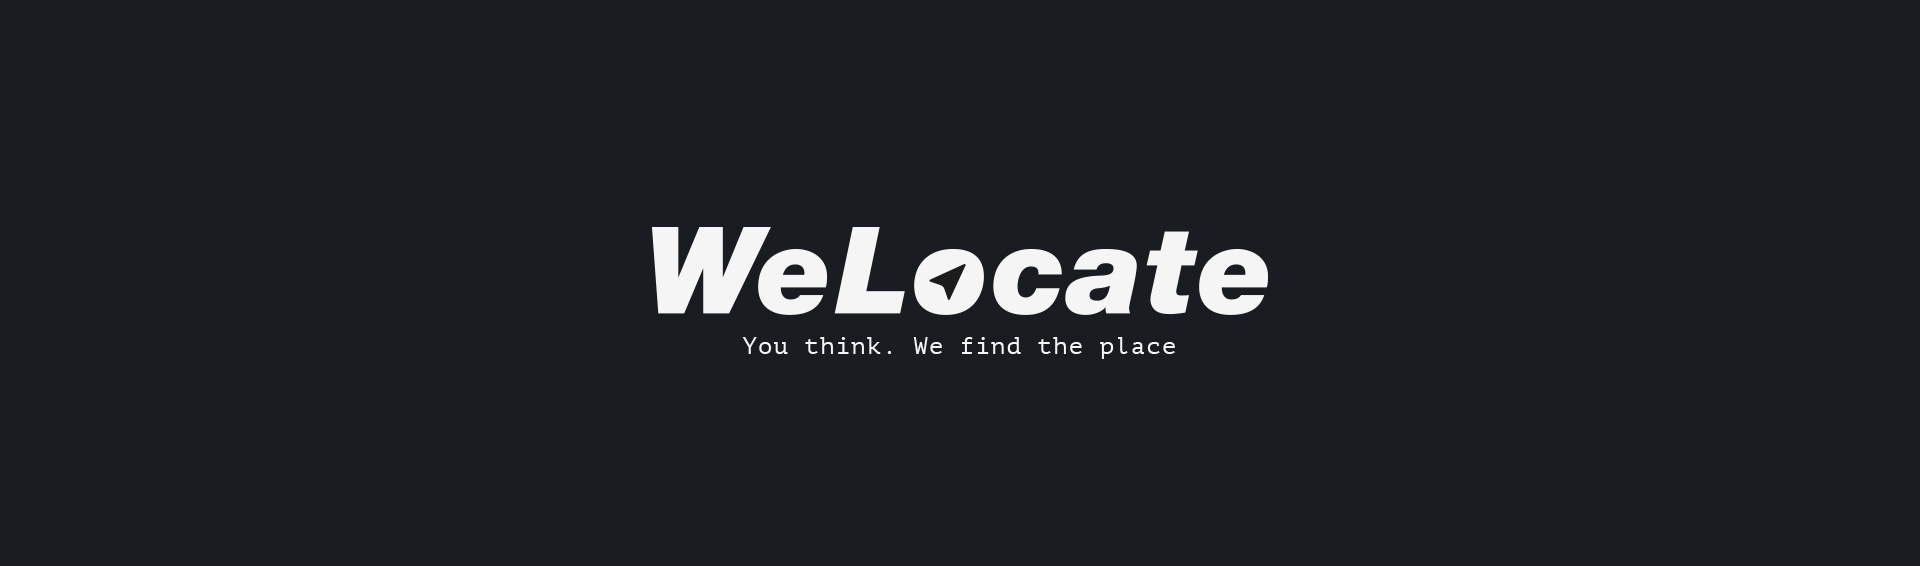 welocate_logotype_identity_corporate